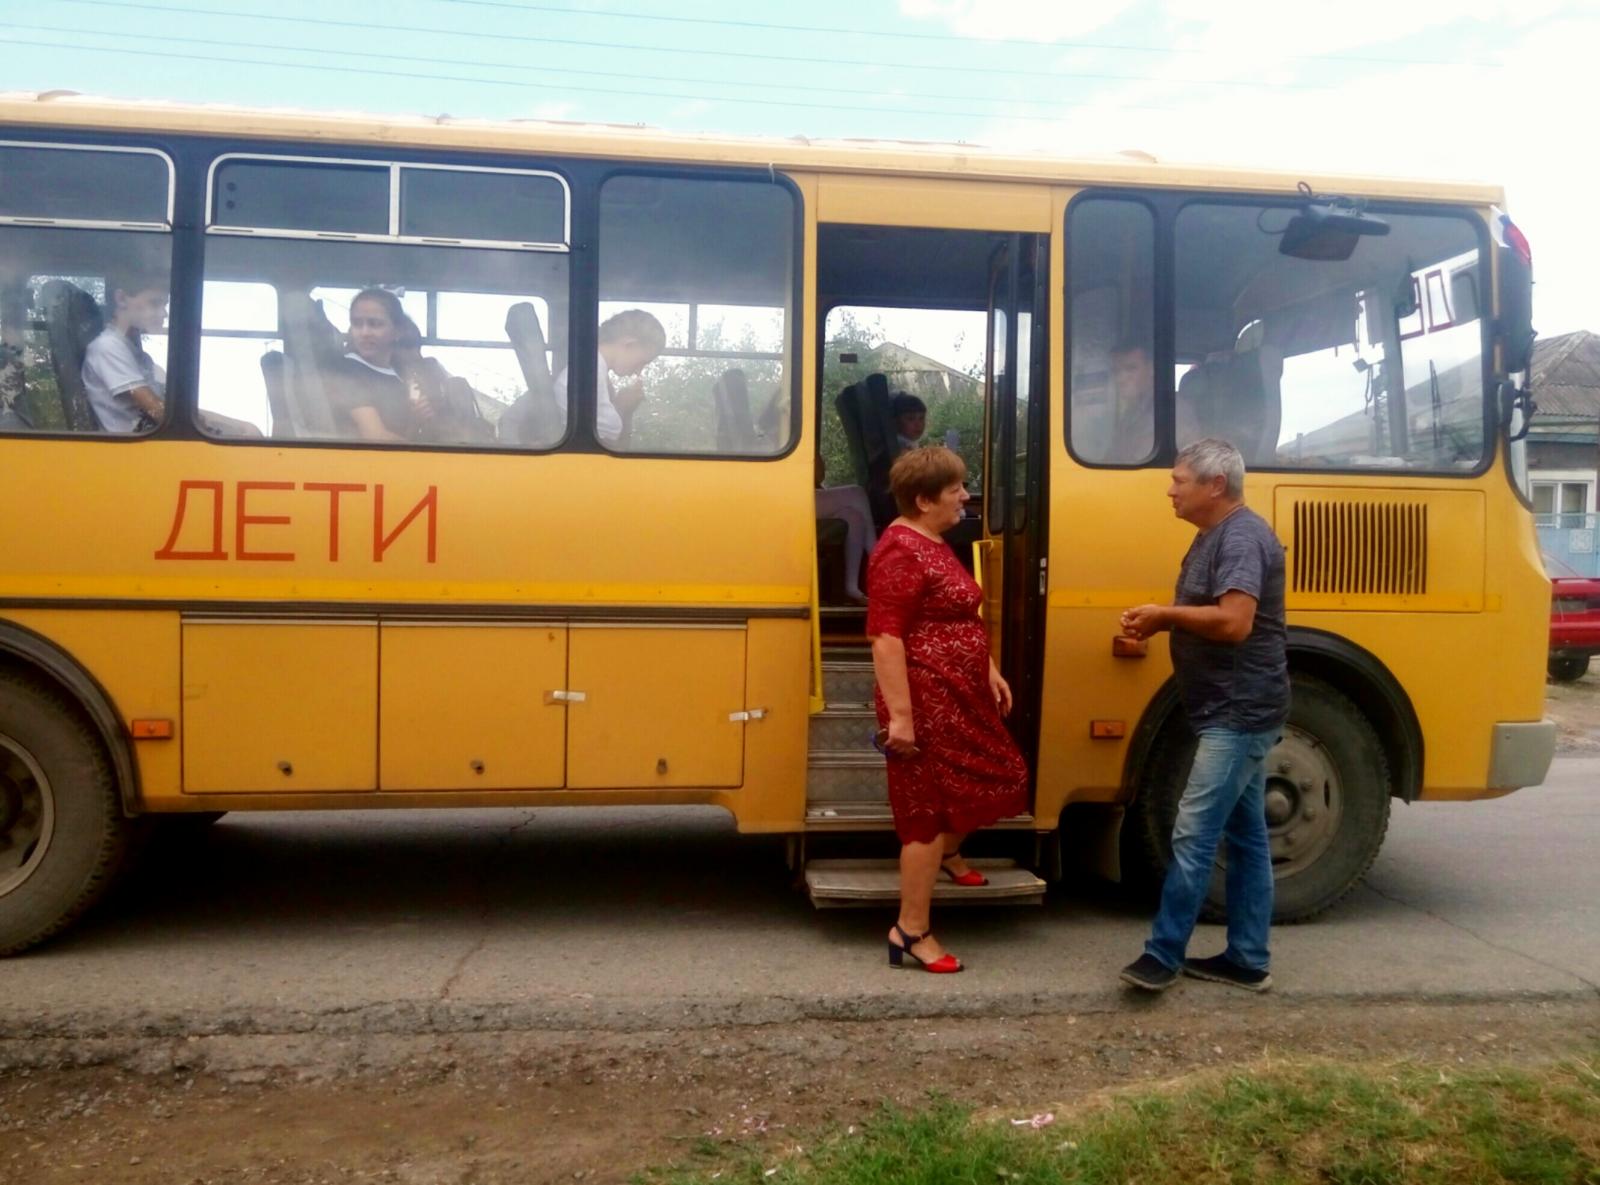 Включи автобус дети. Школьный автобус. Автобус для детей. Автобус для перевозки детей. Школьный автобус дети.